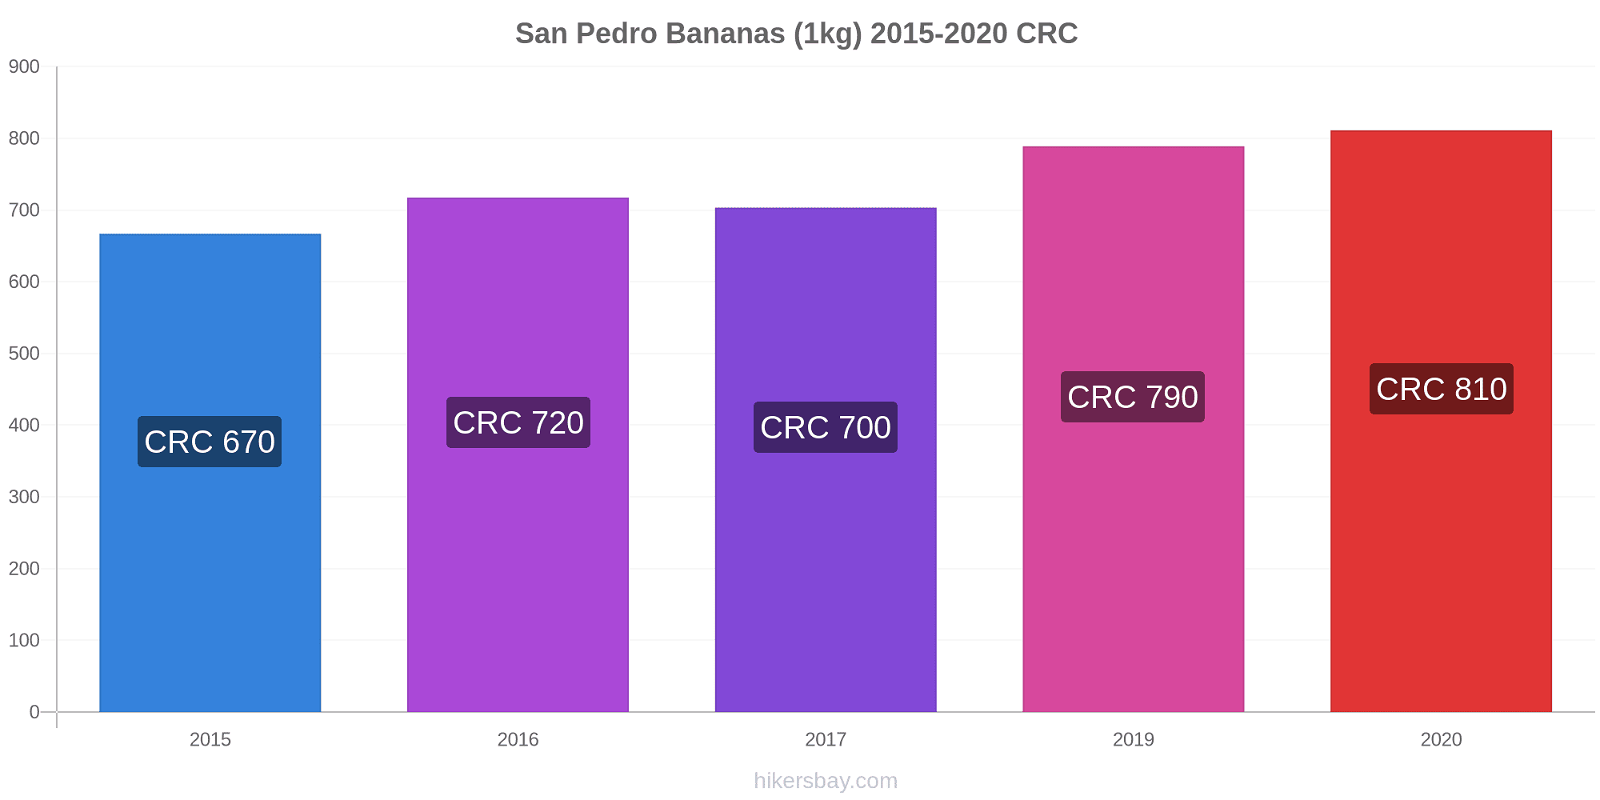 San Pedro price changes Bananas (1kg) hikersbay.com